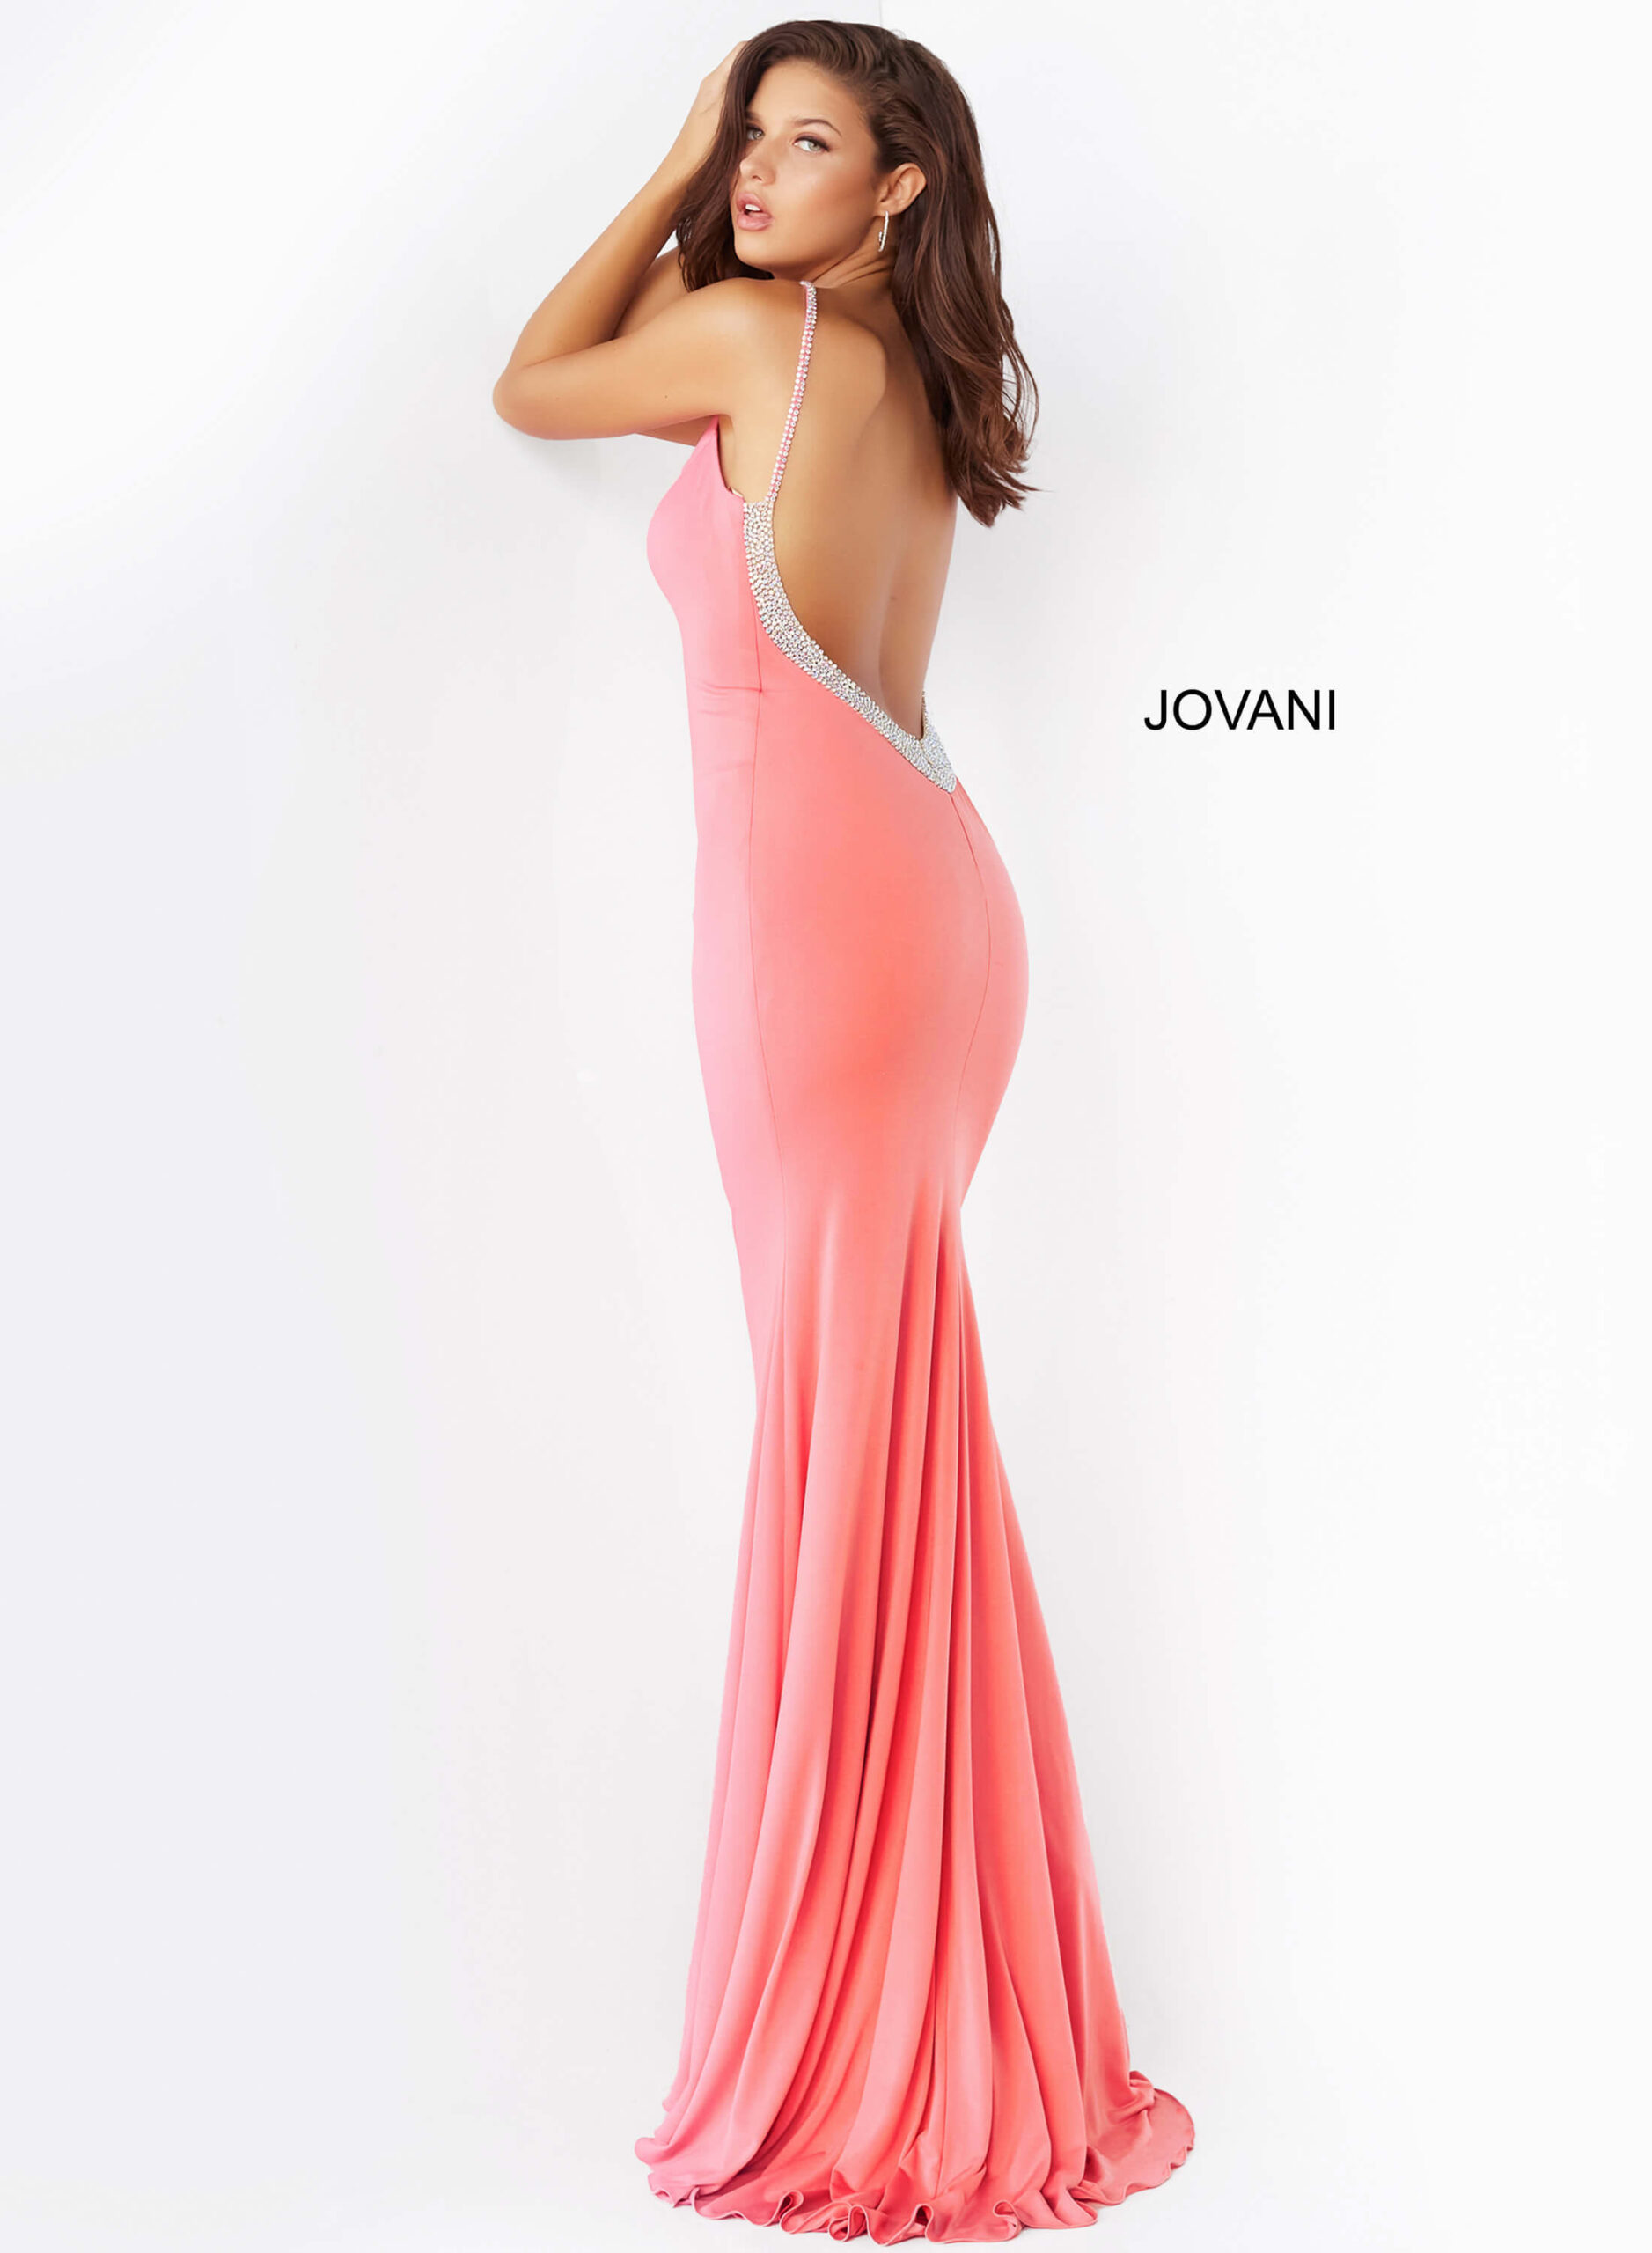 Jovani 07297 Hot Pink Backless V Neck Dress